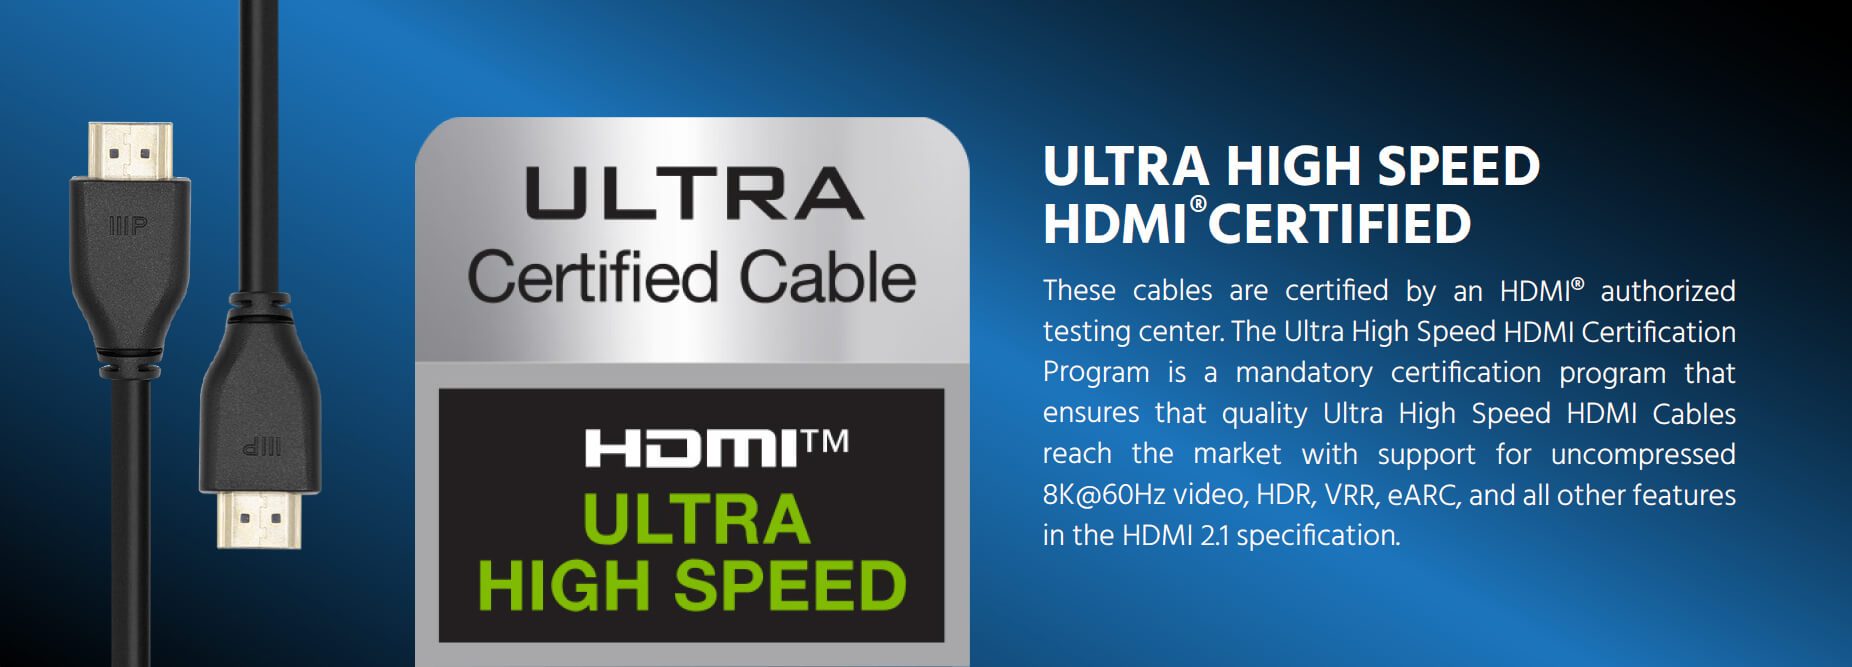 Ultra High Speed HDMI Certified